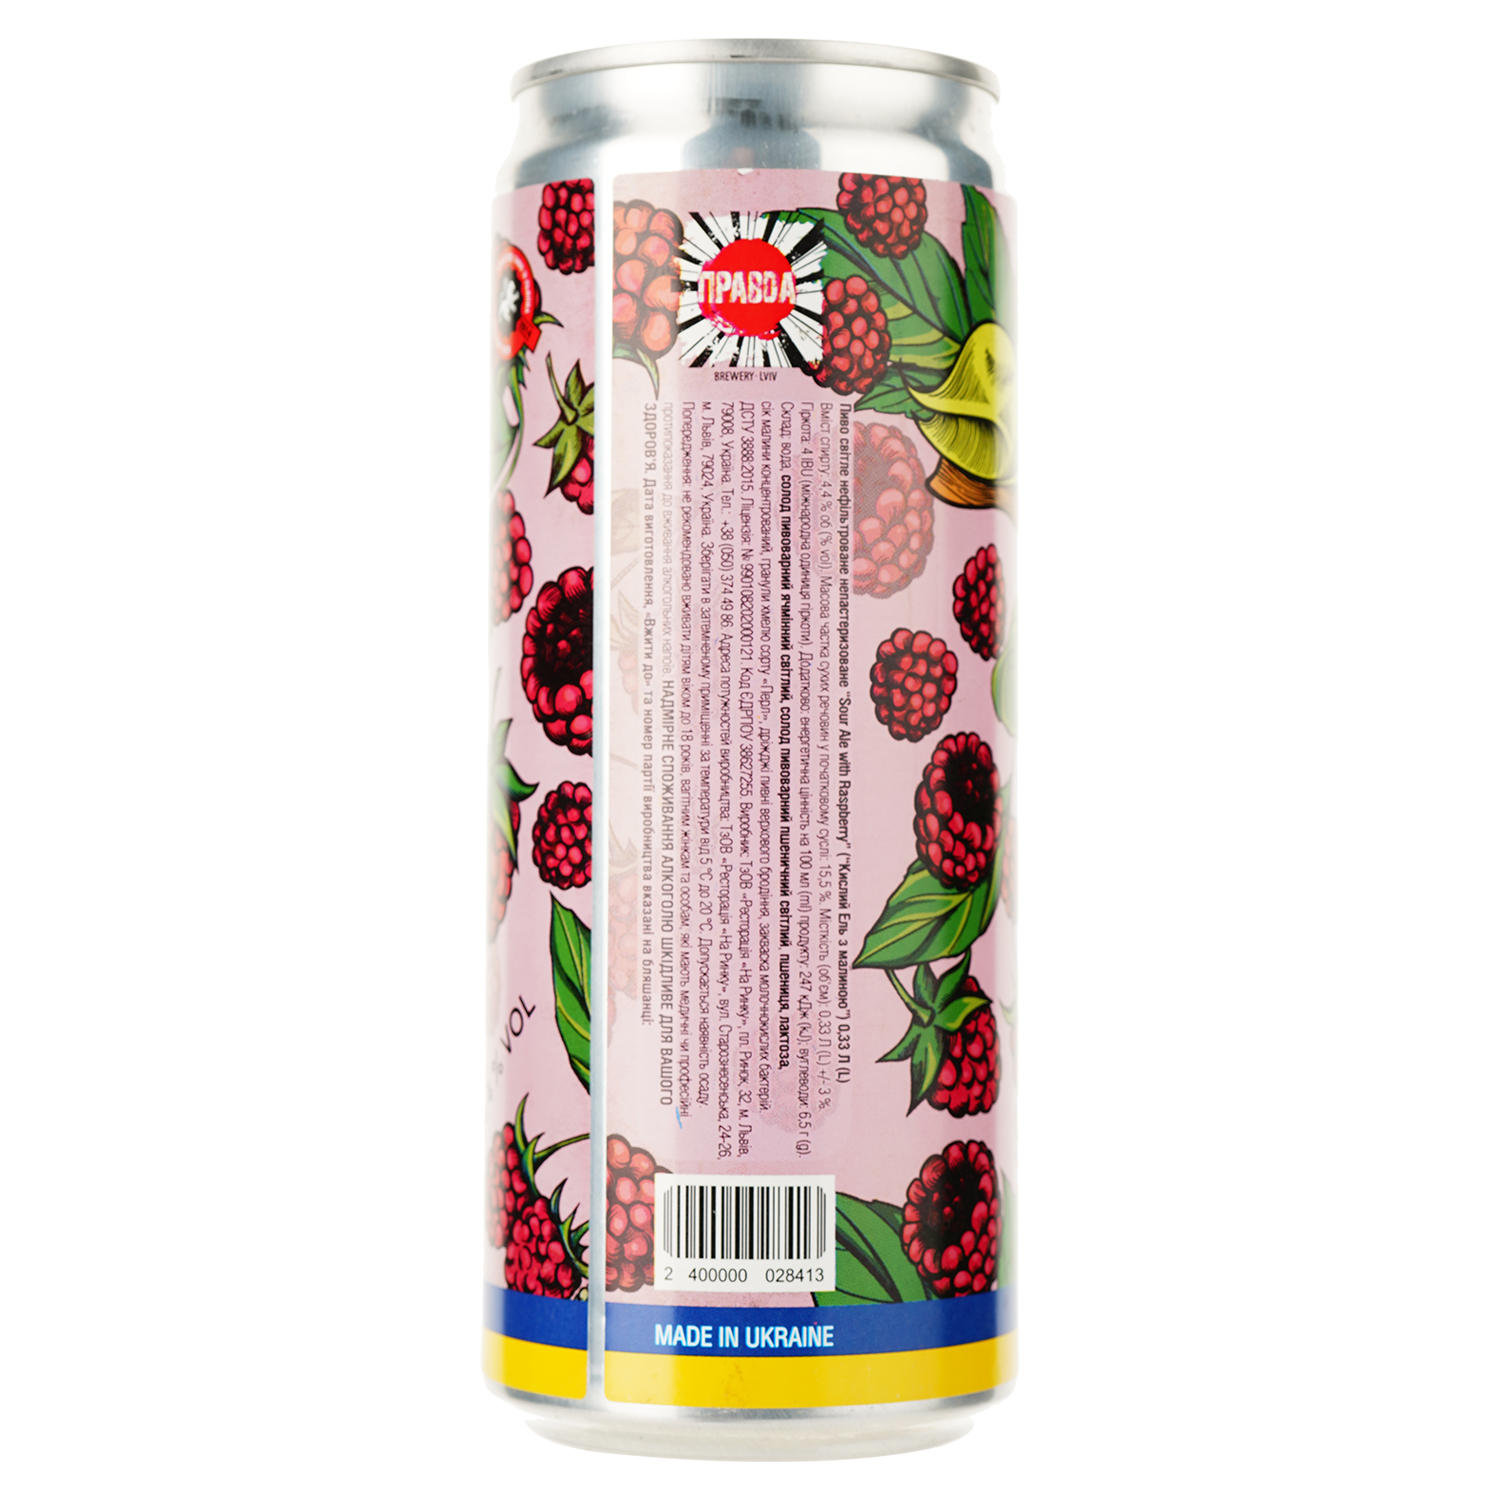 Пиво Правда Sour Ale Raspberry, светлое, нефильтрованное, 4.4%, ж/б, 0.33 л - фото 2